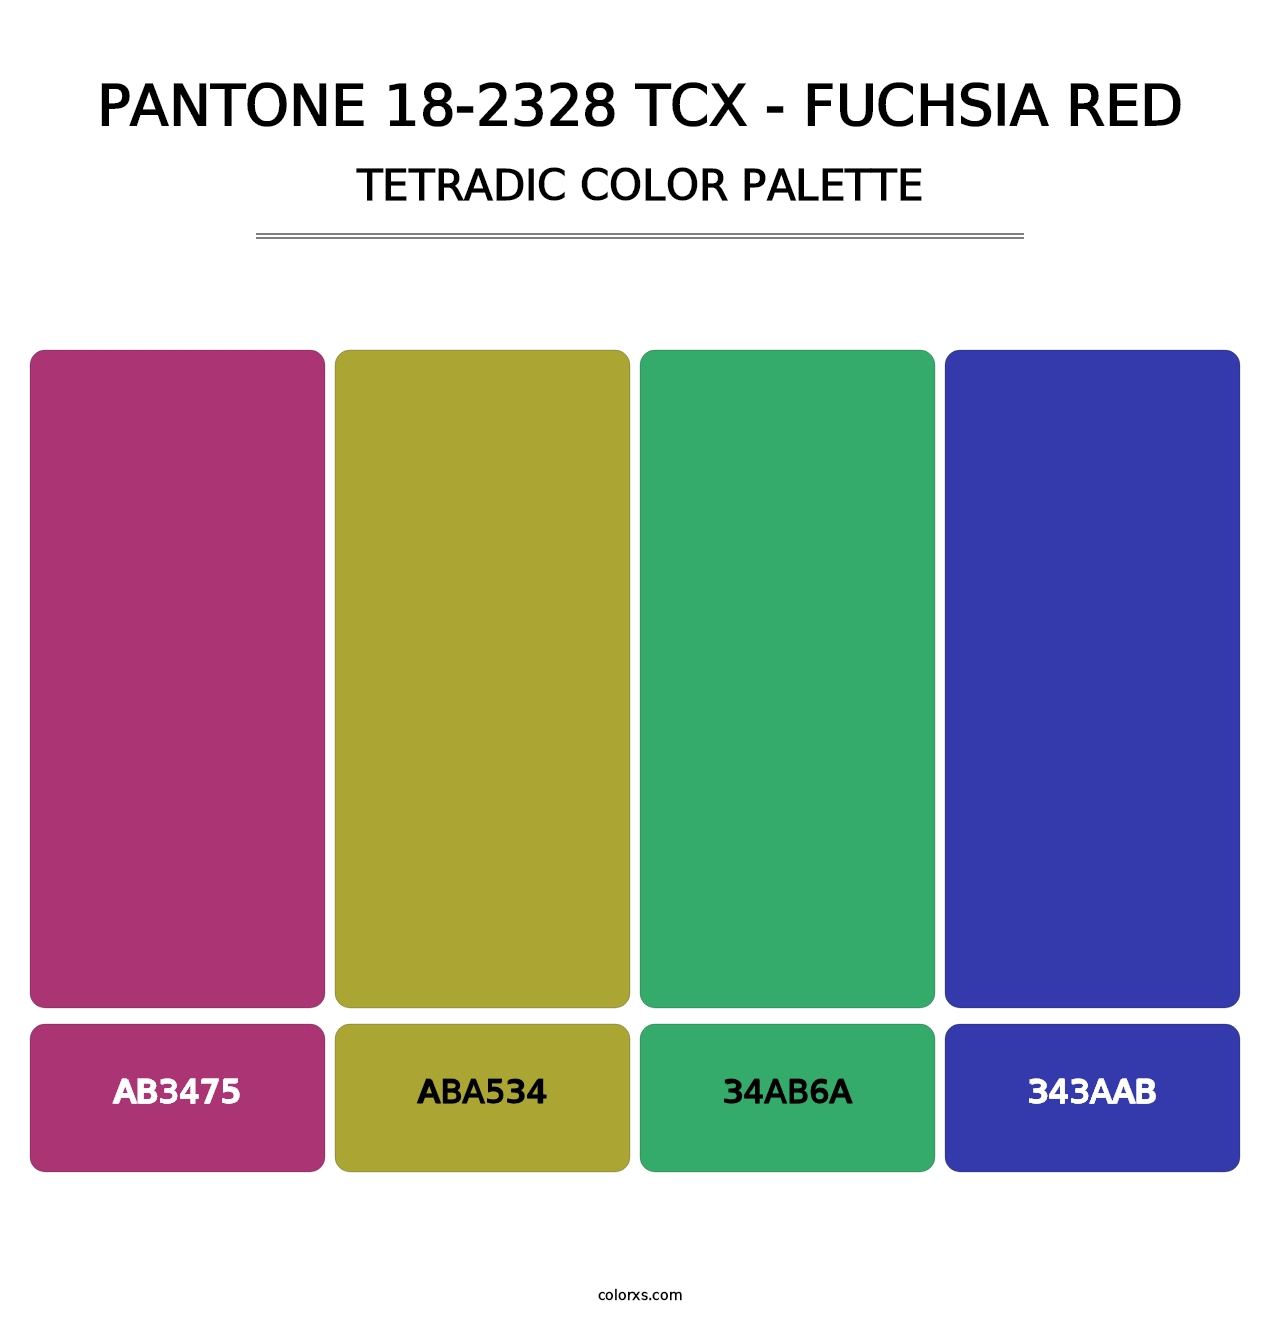 PANTONE 18-2328 TCX - Fuchsia Red - Tetradic Color Palette